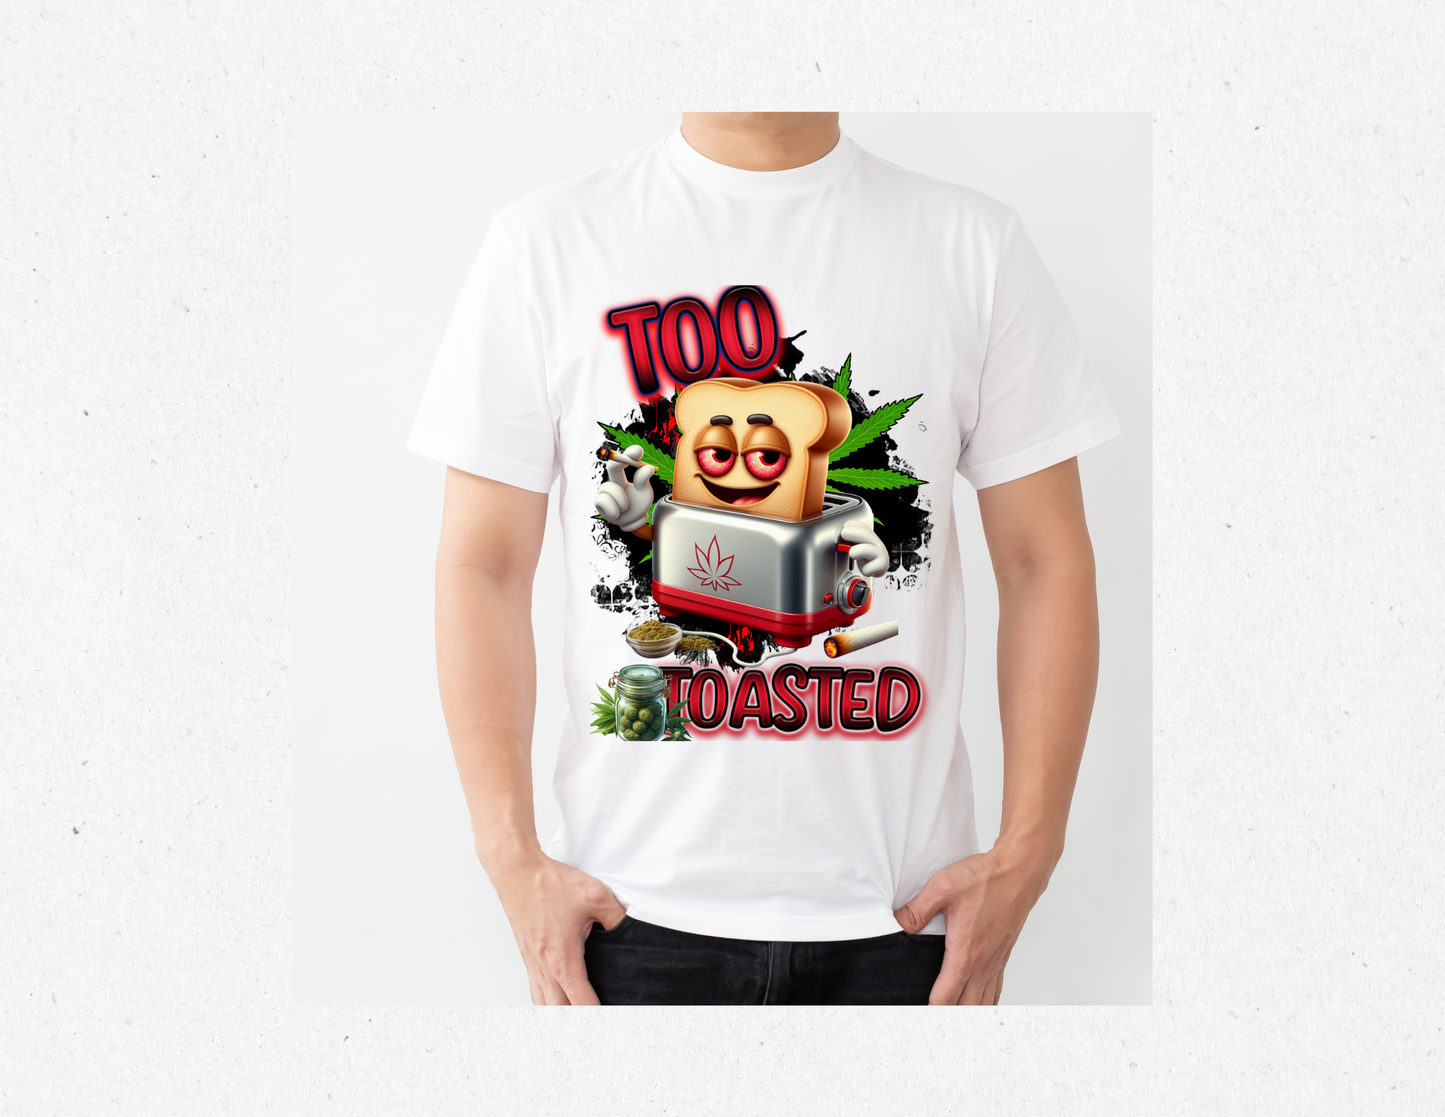 Baked, Fried, & Toasted shirts - Customizing the Chaos 